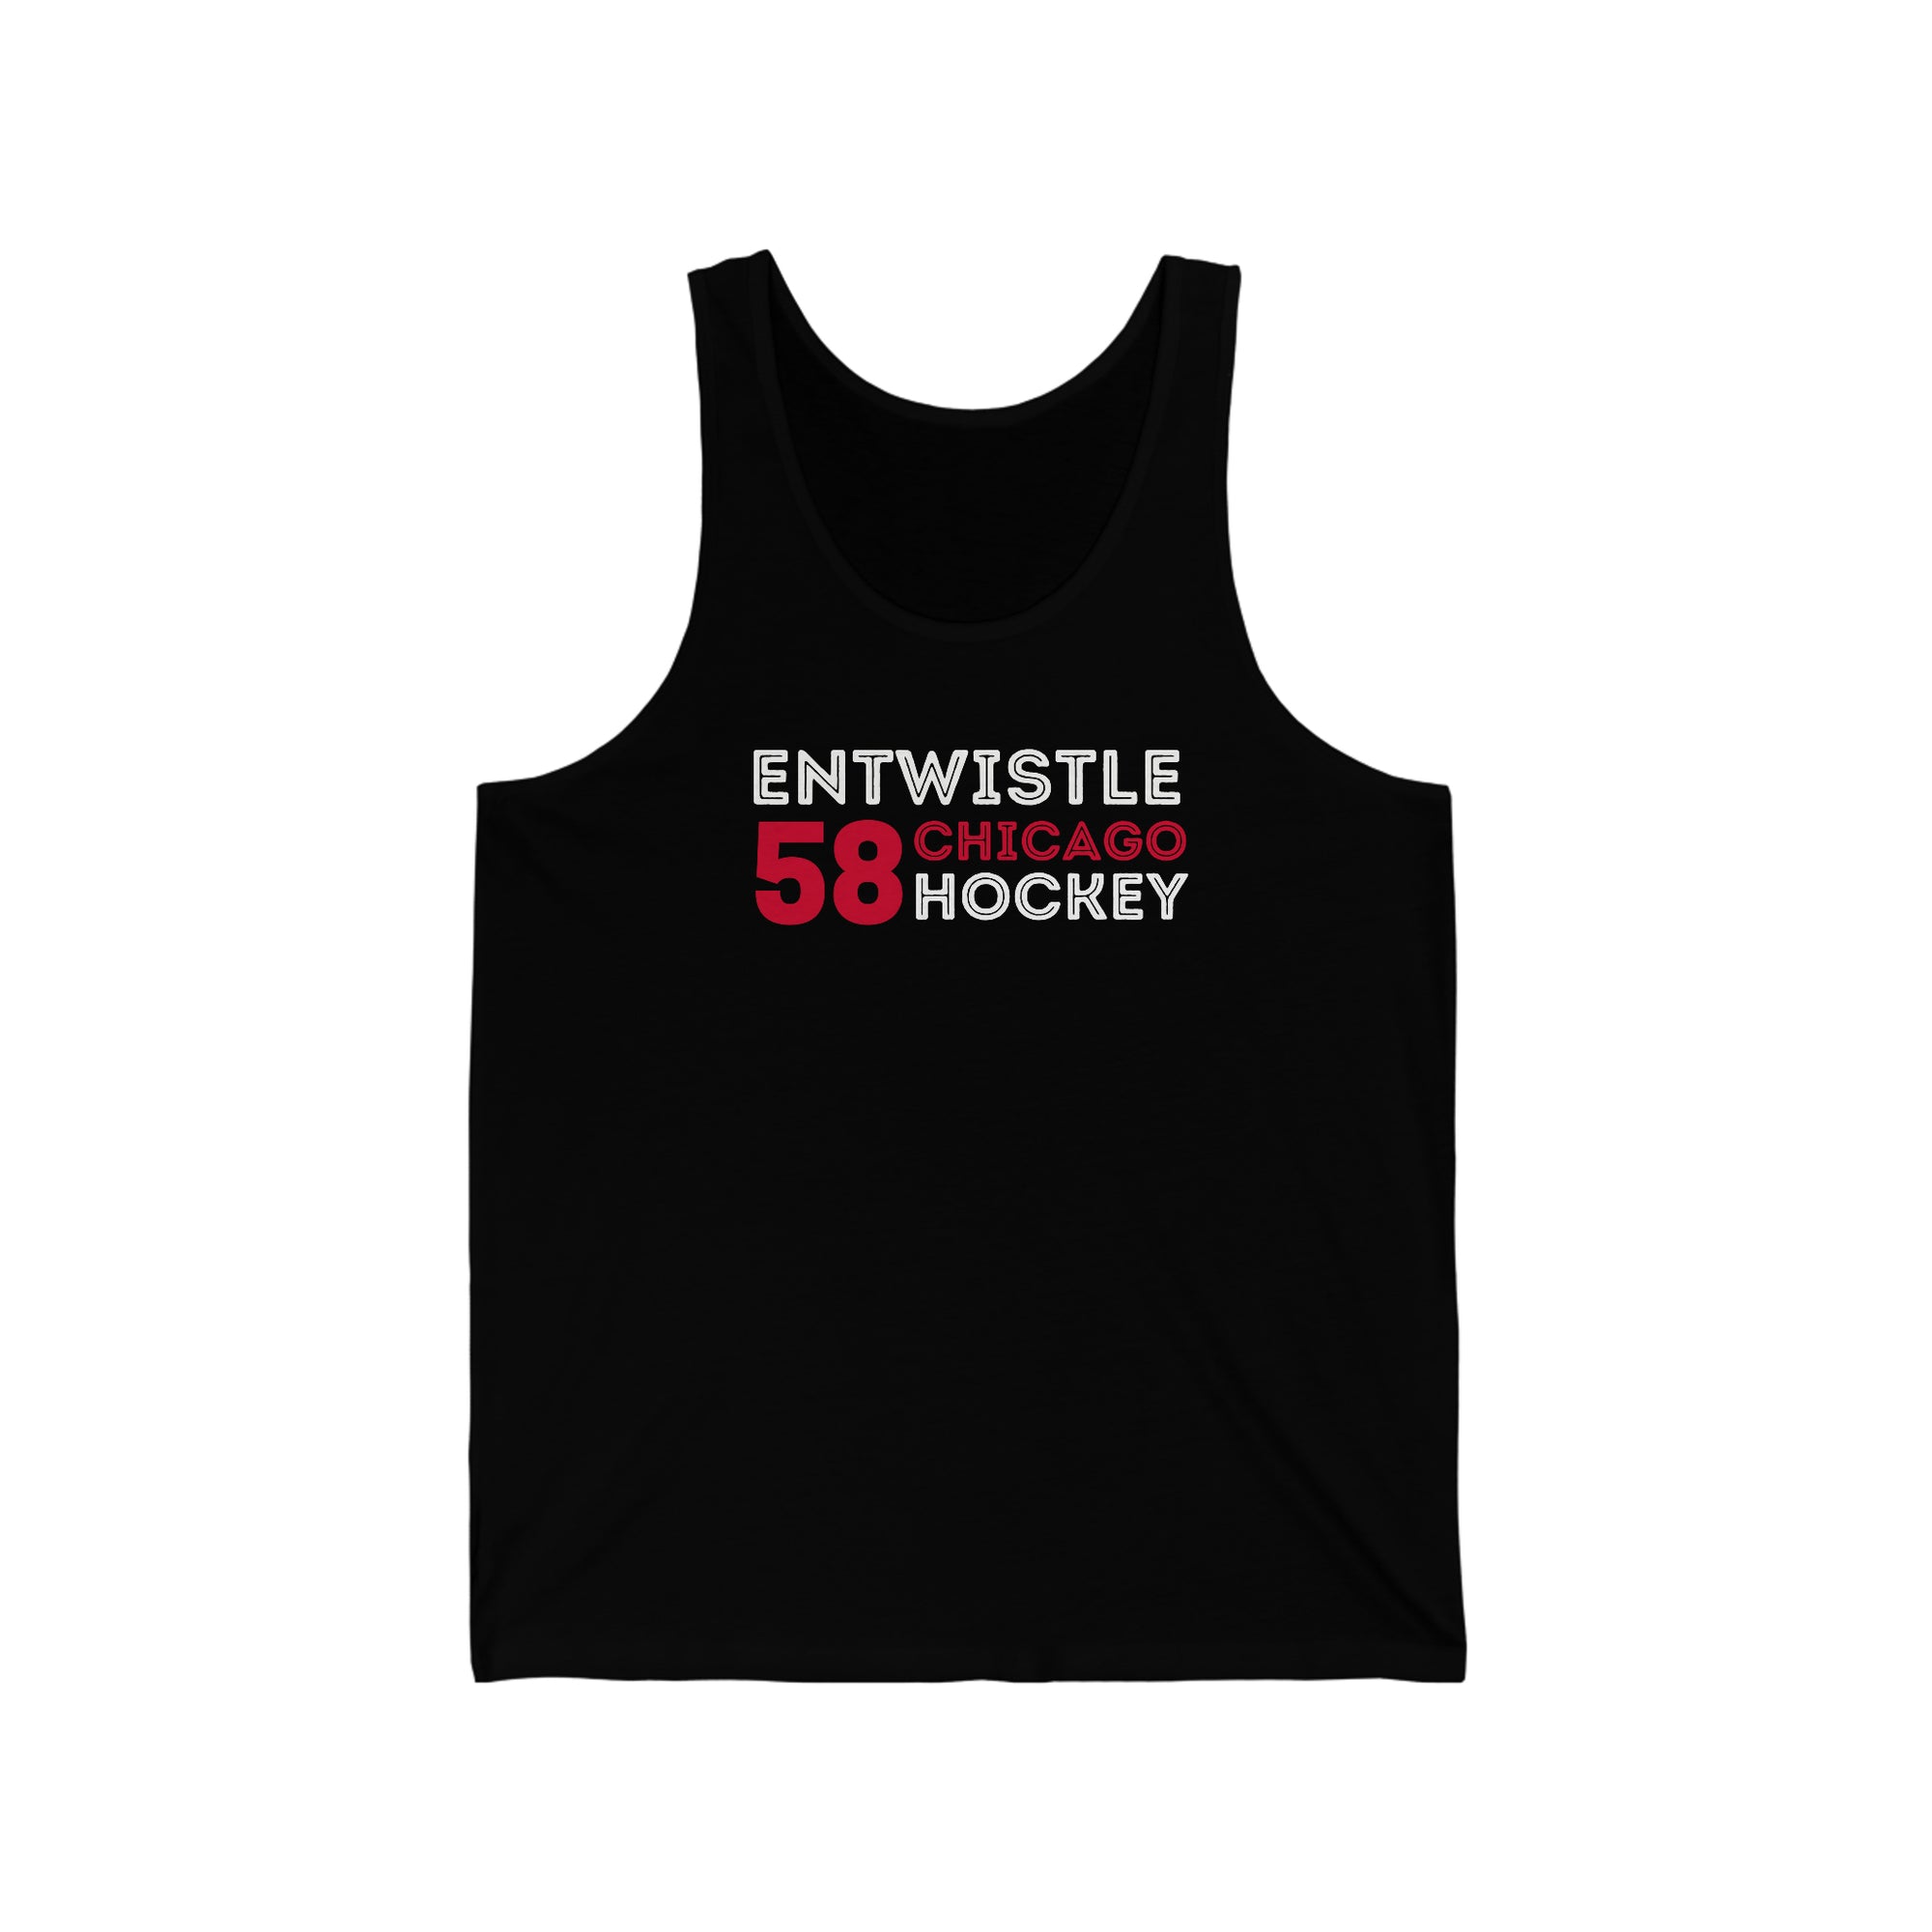 Entwistle 58 Chicago Hockey Grafitti Wall Design Unisex Jersey Tank Top